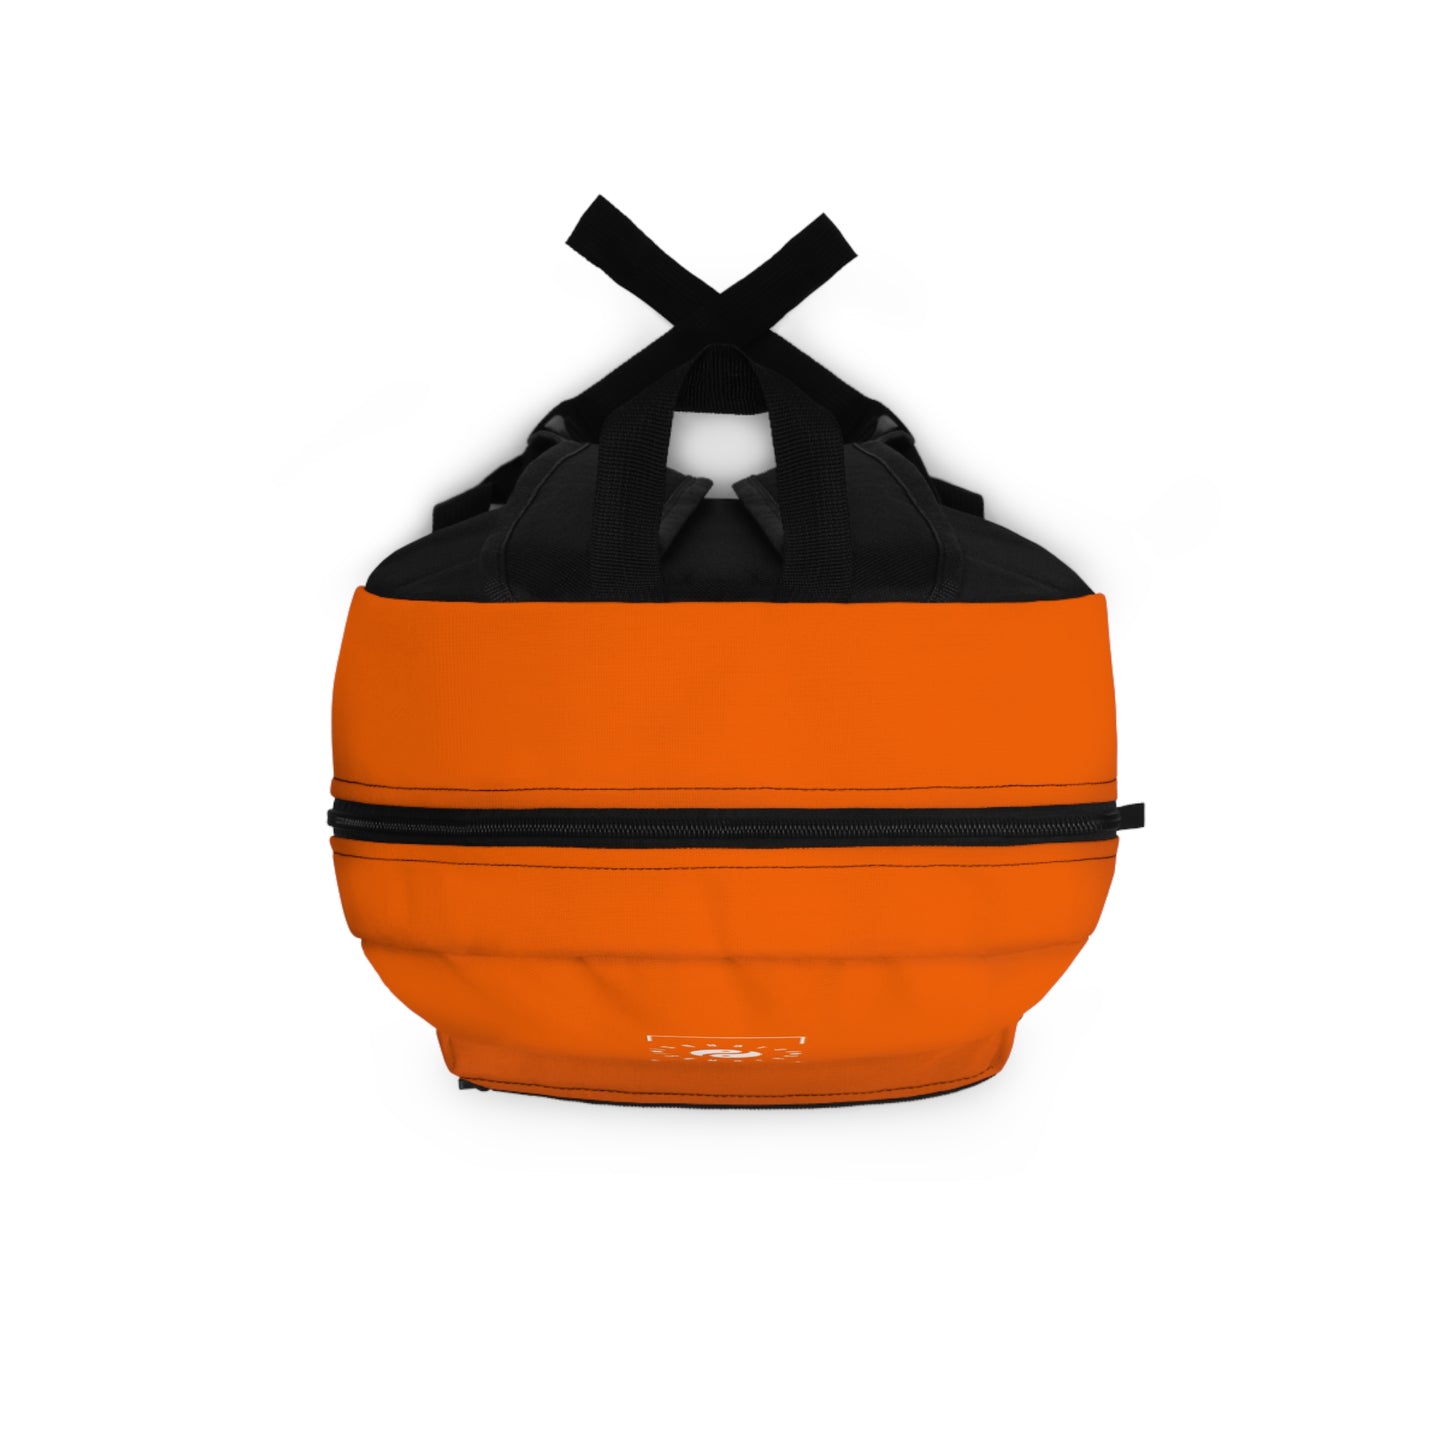 Neon Orange #FF6700 - Backpack